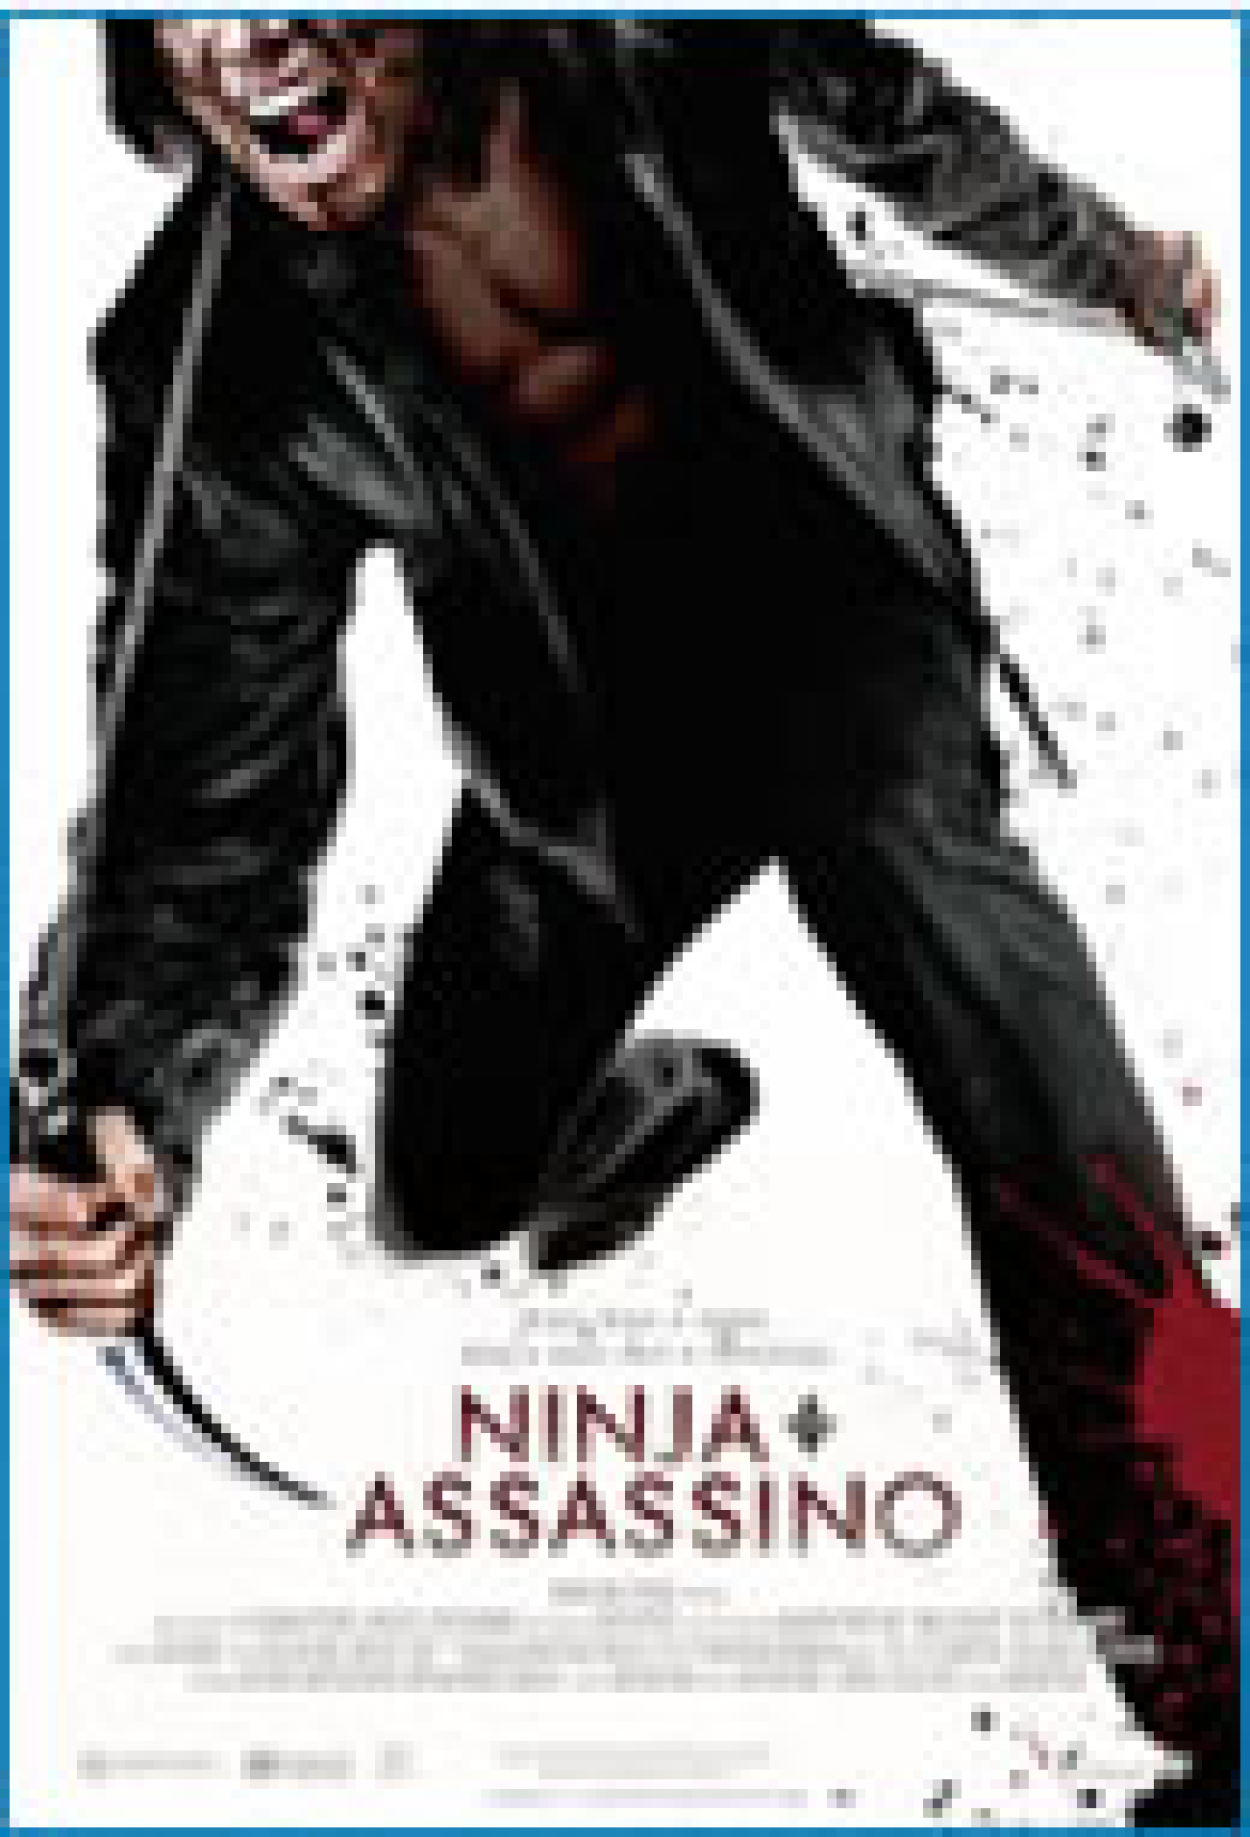 baixar filme ninja assassino